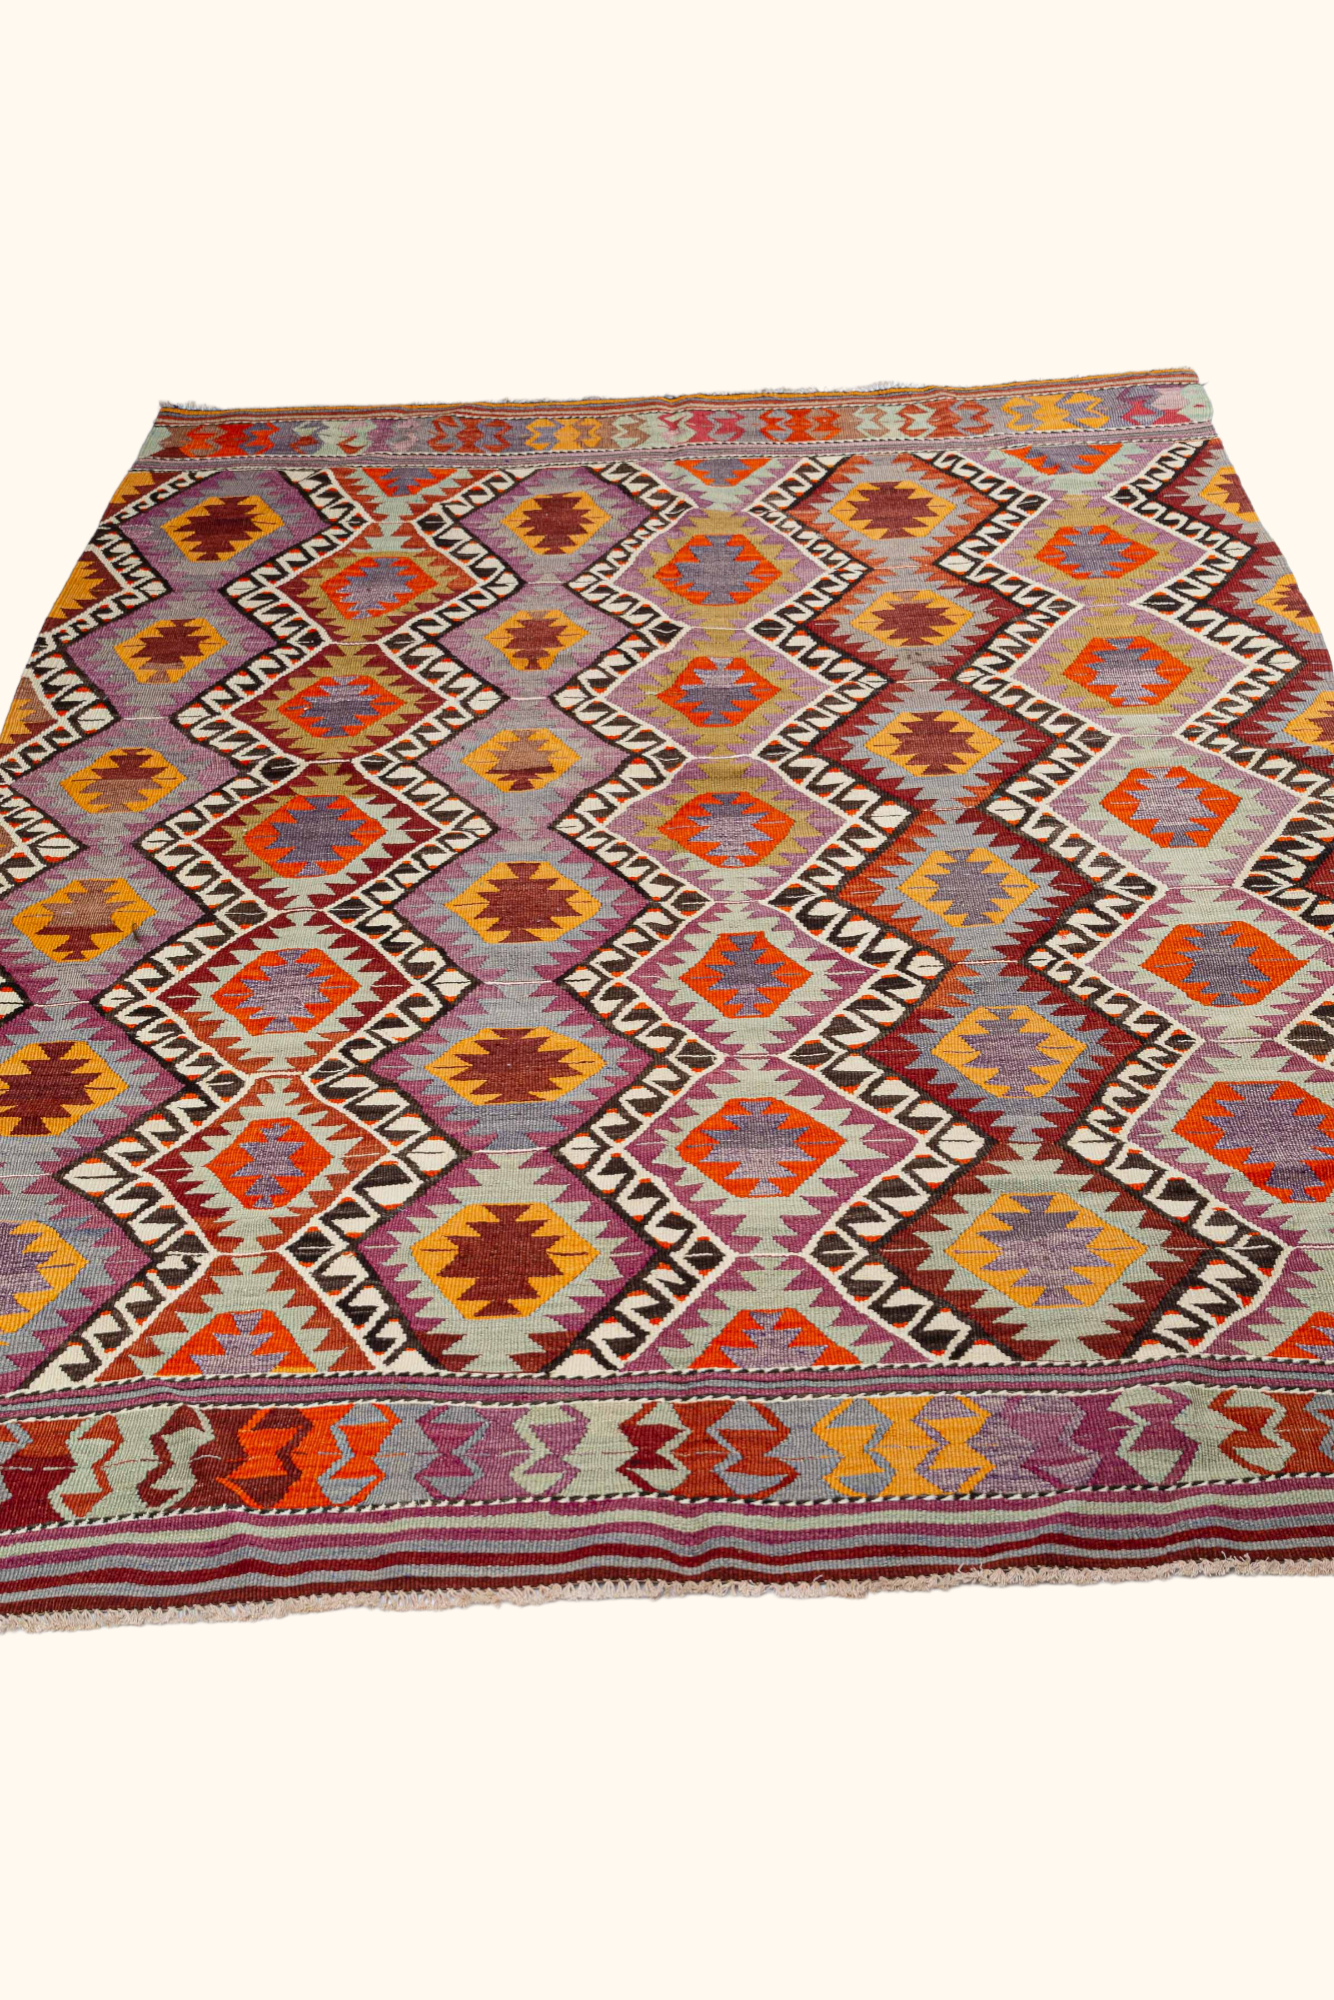 FETHIYE Vintage Kelim rug 250cm x 176cm